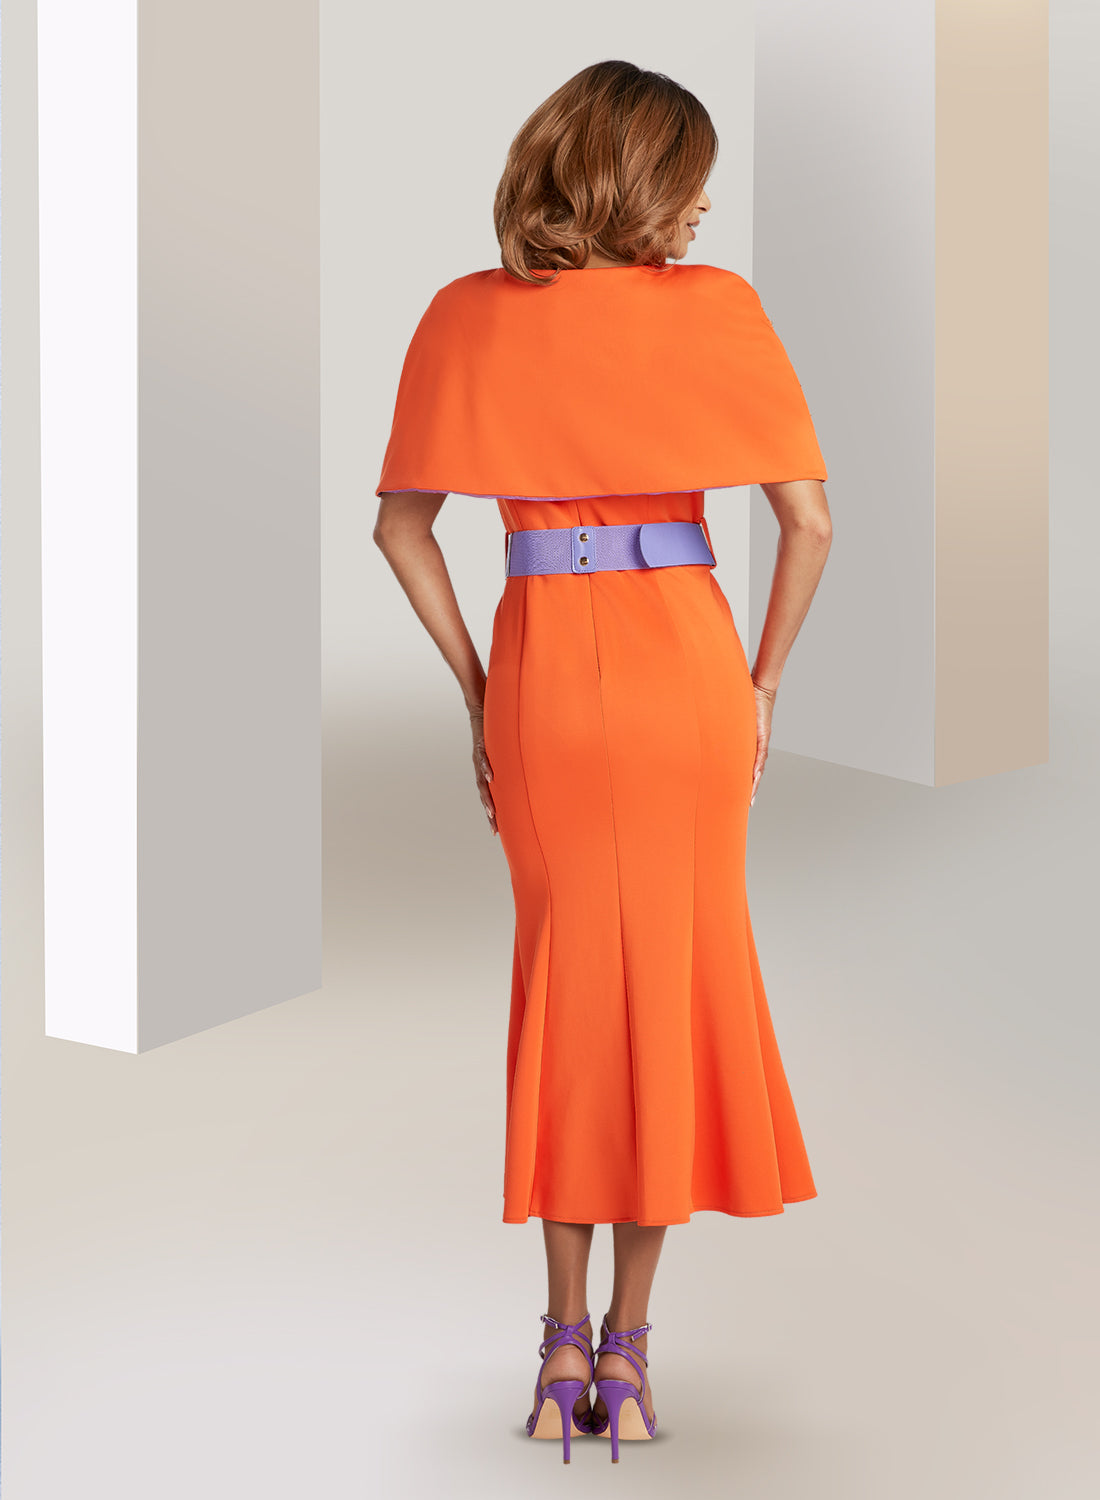 Donna Vinci 12076 - Orange - Rhinestone Trim Caplet Dress